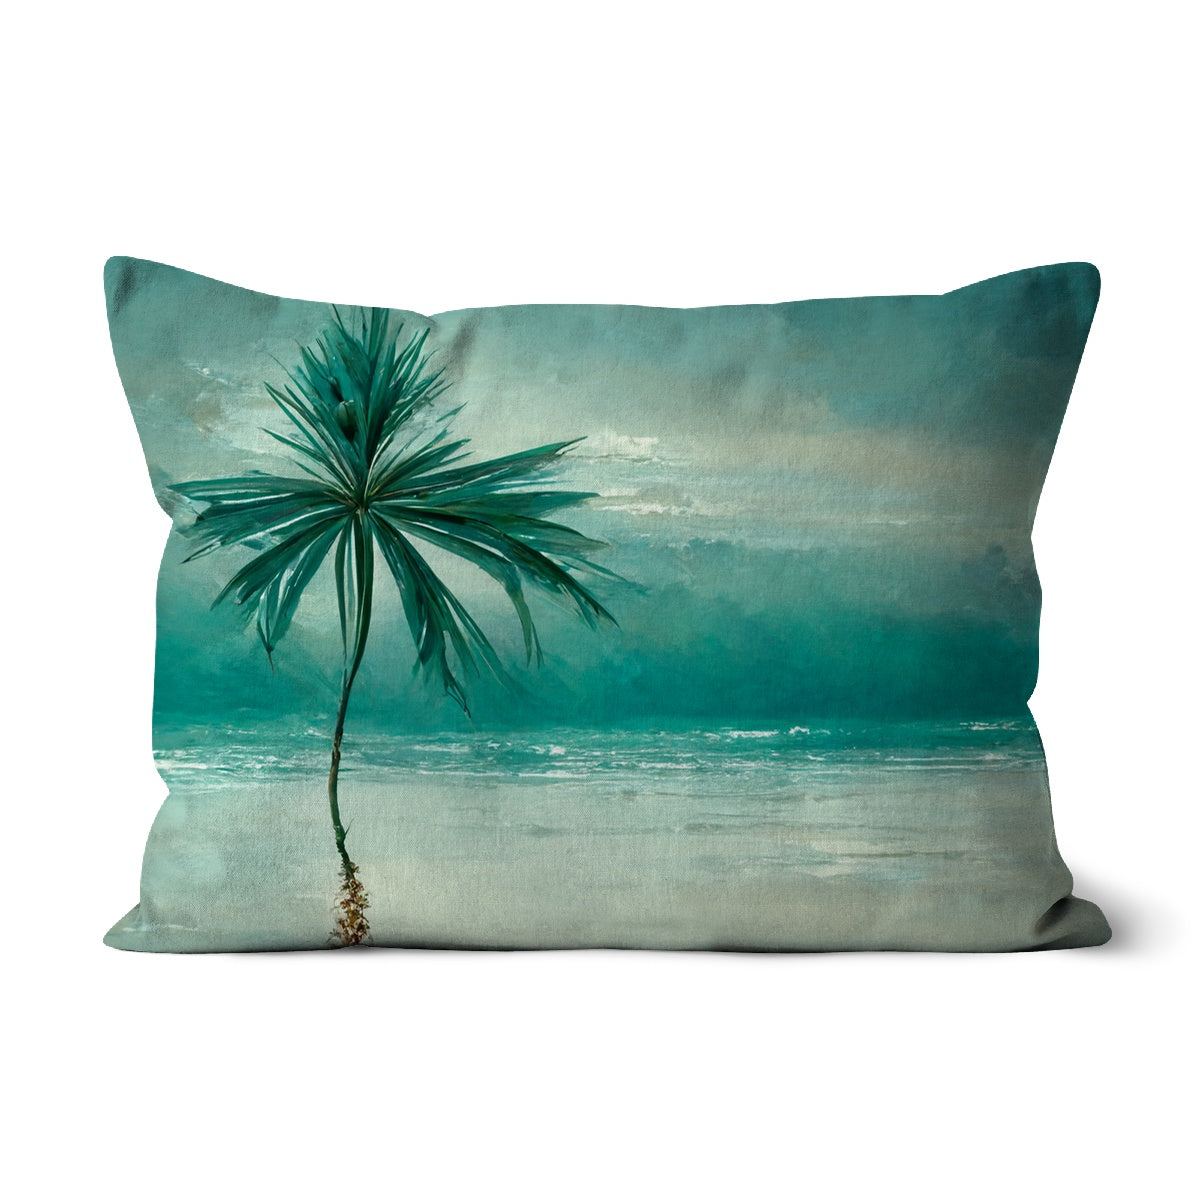 Lonesome Palm Cushion